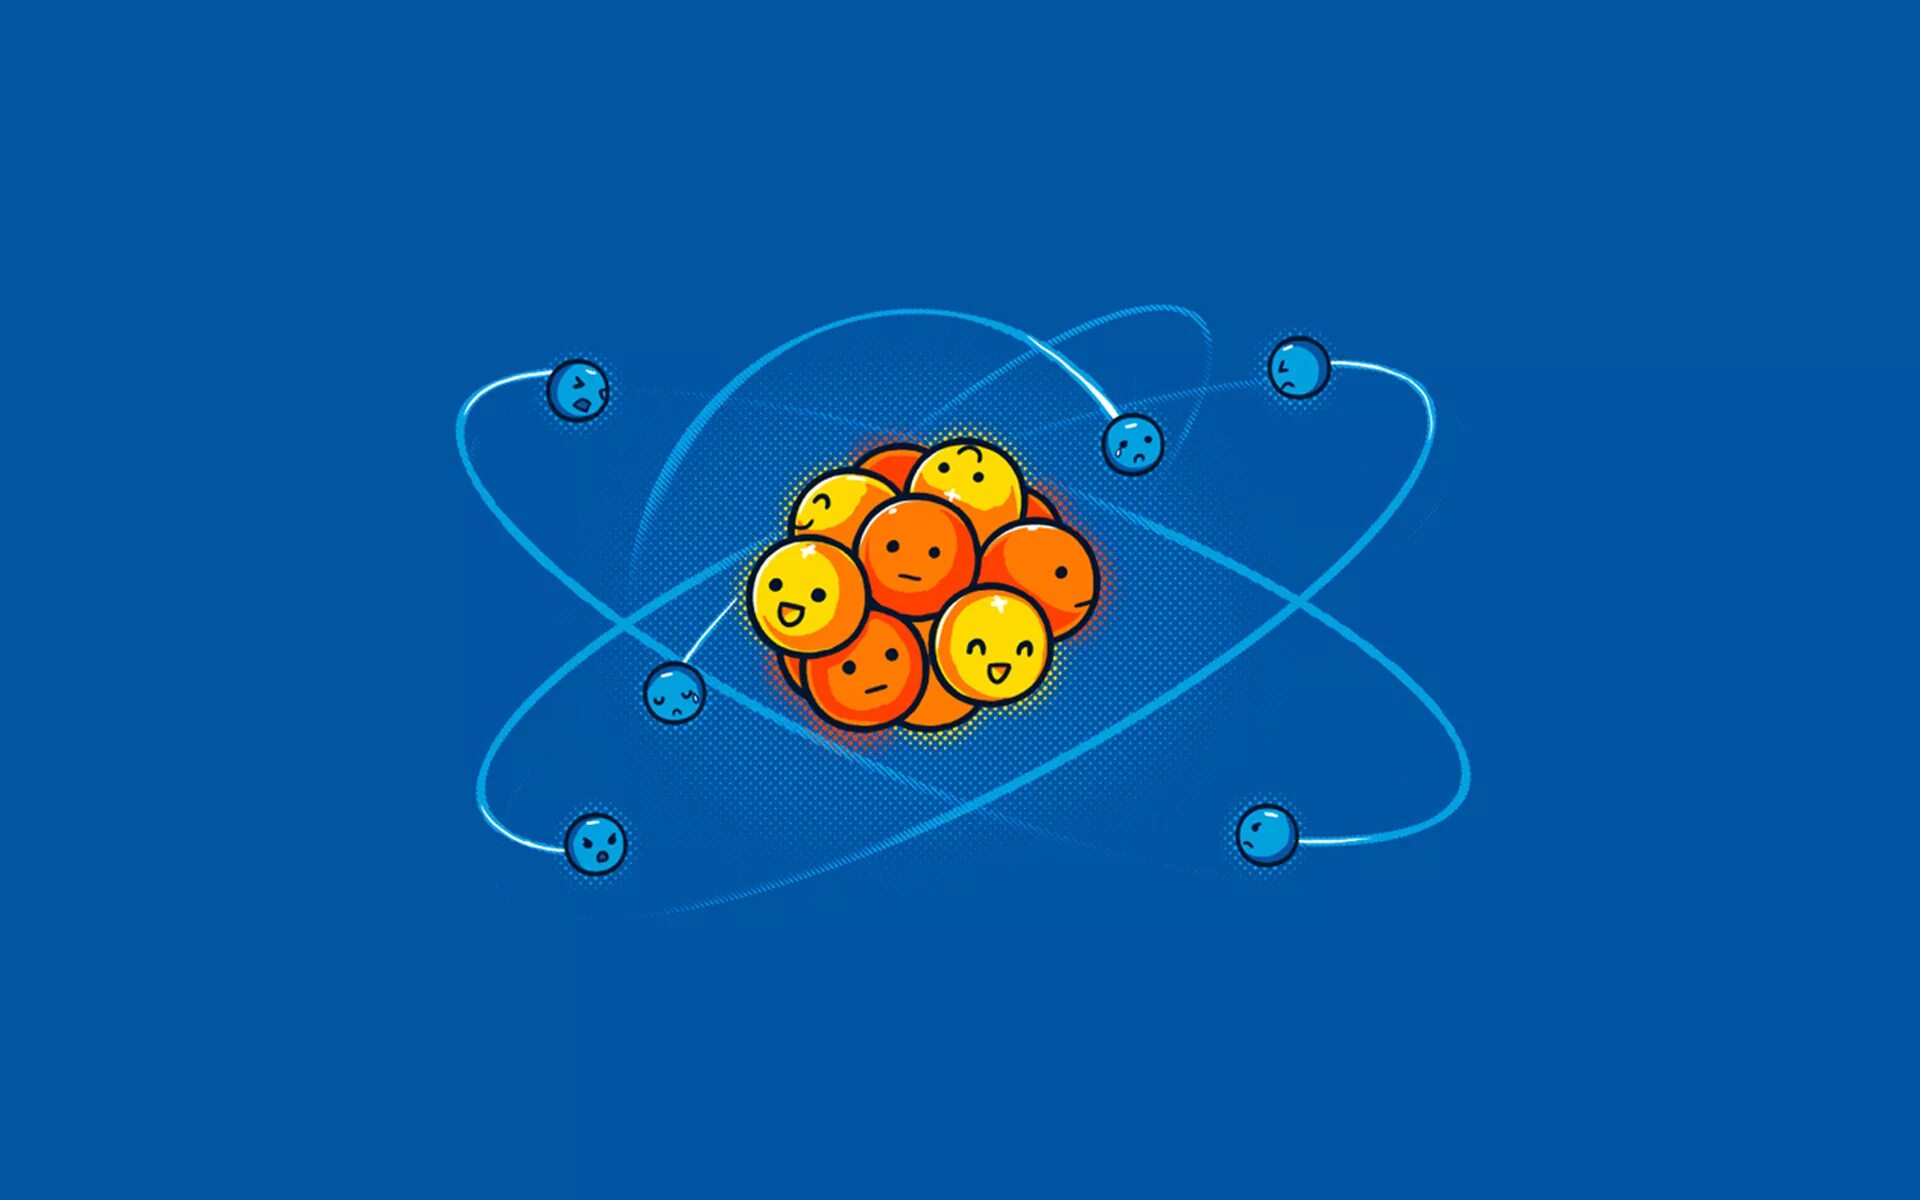 Атом длс. Атом рисунок. Изображение атома. Молекулы фон. Физика фон.